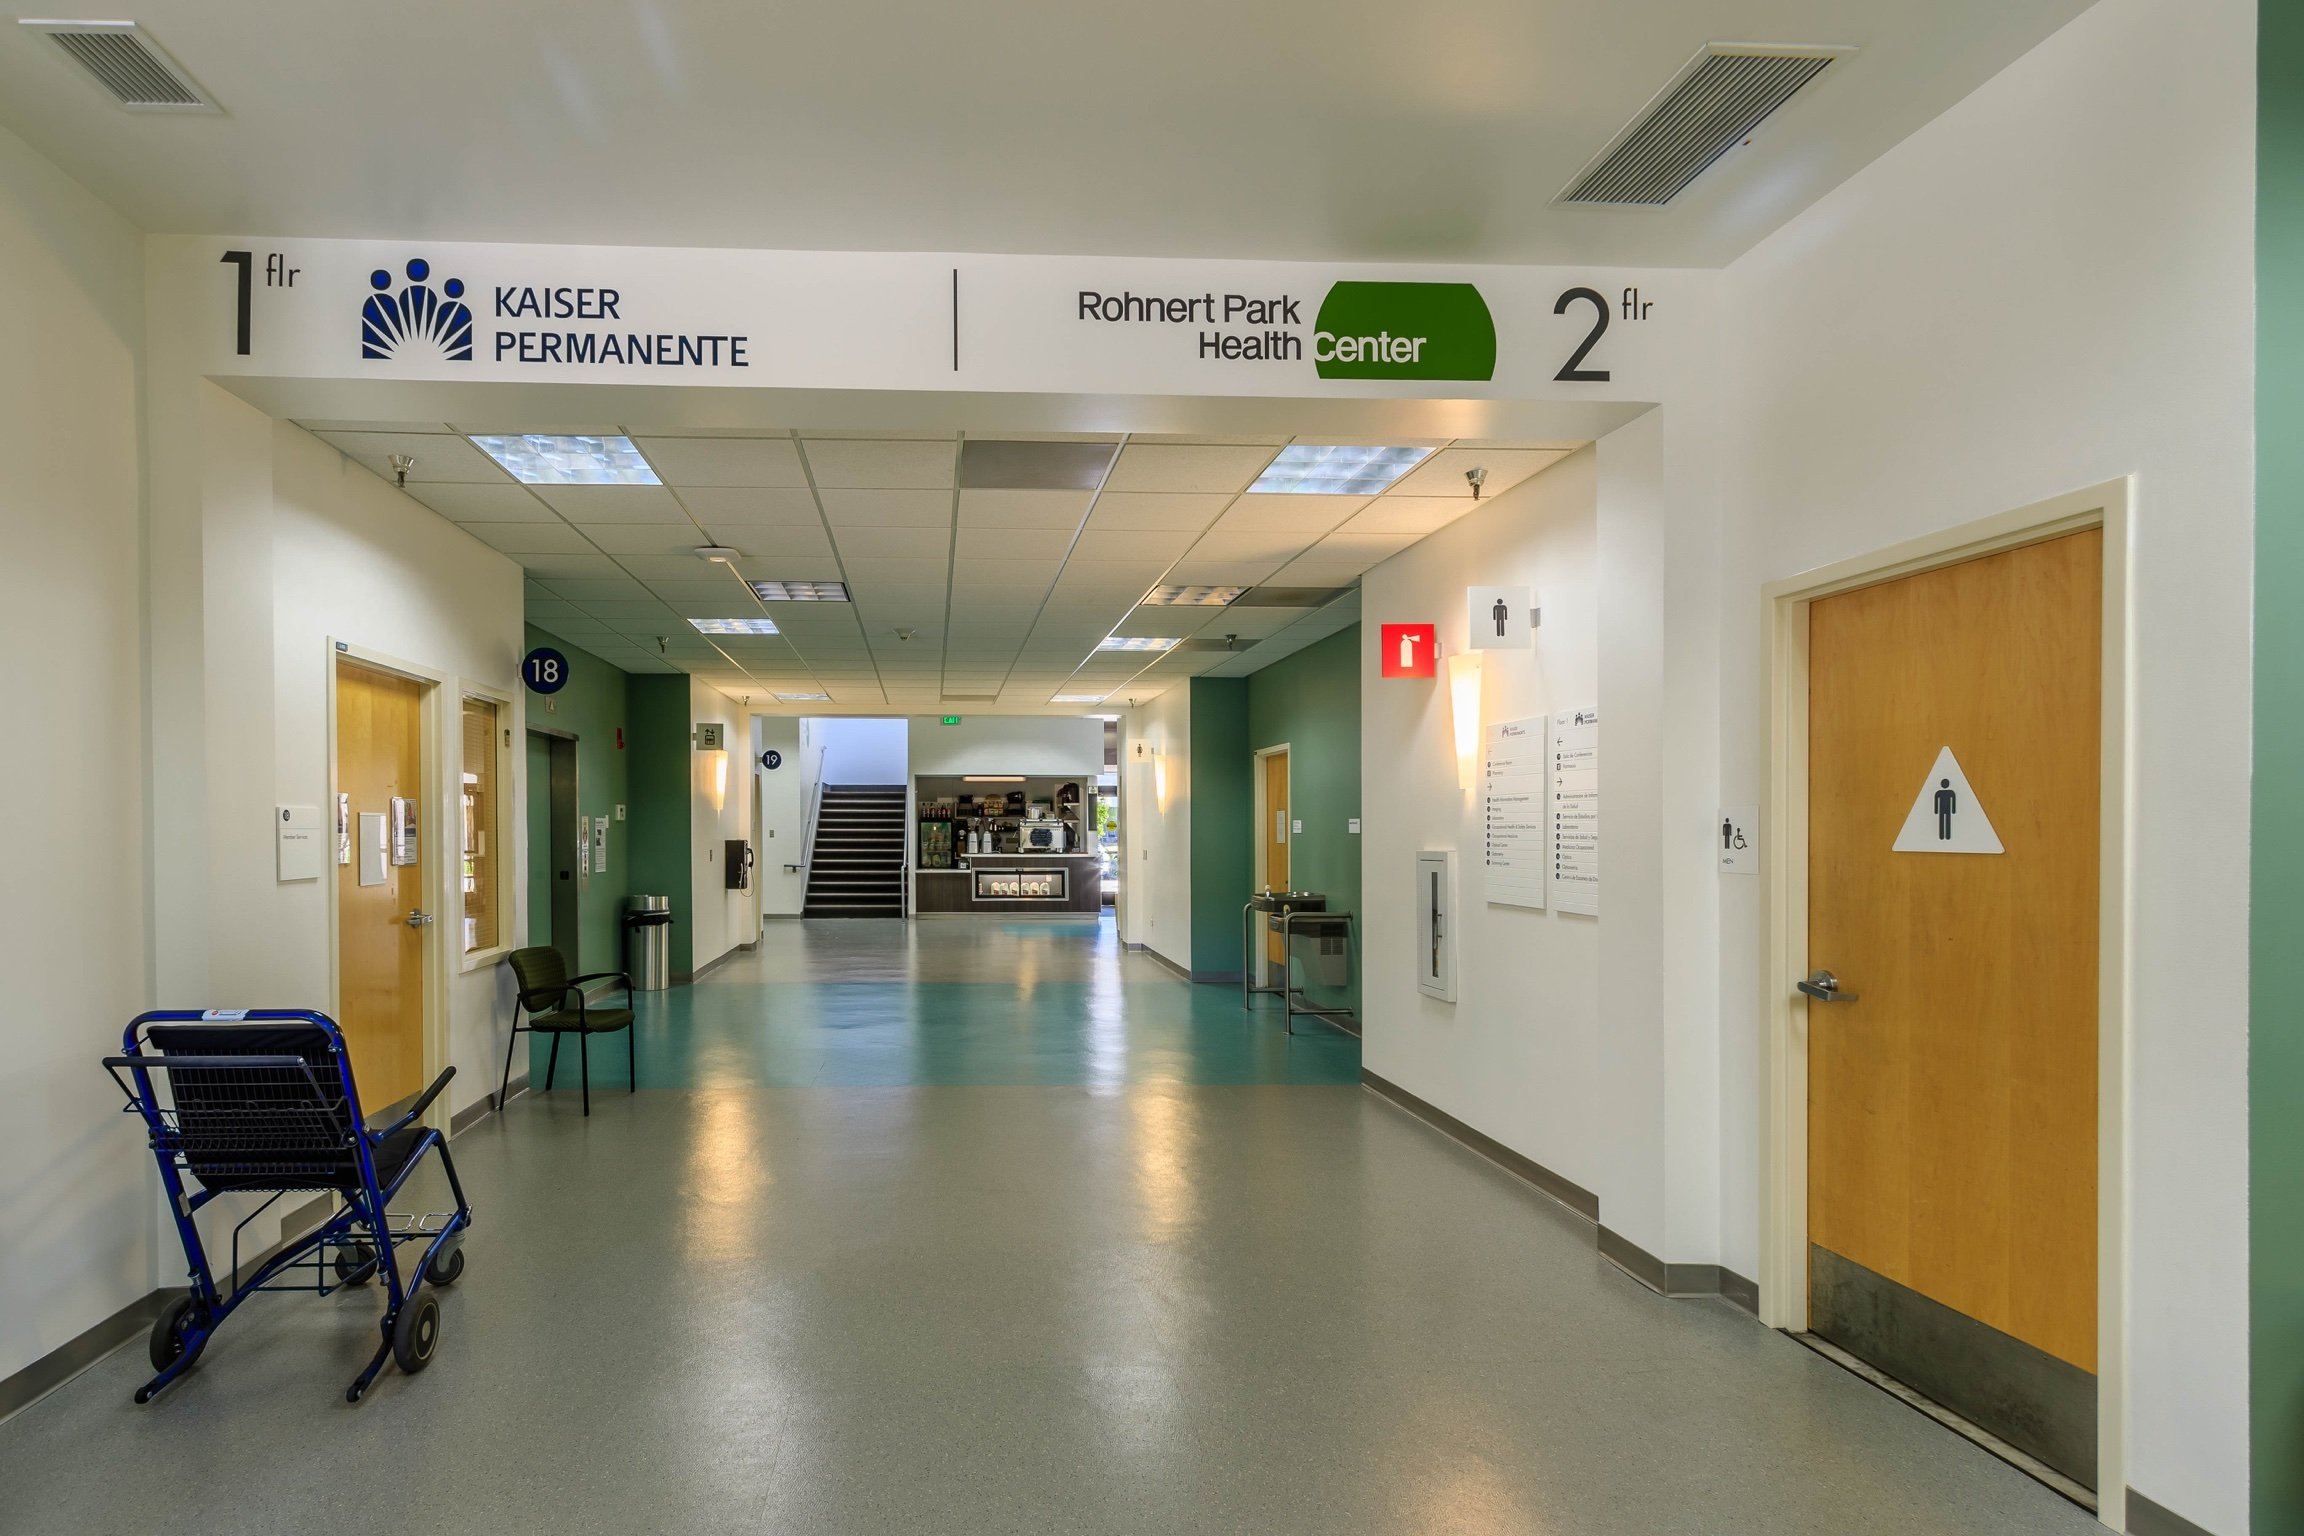 Rohnert Park Health Center